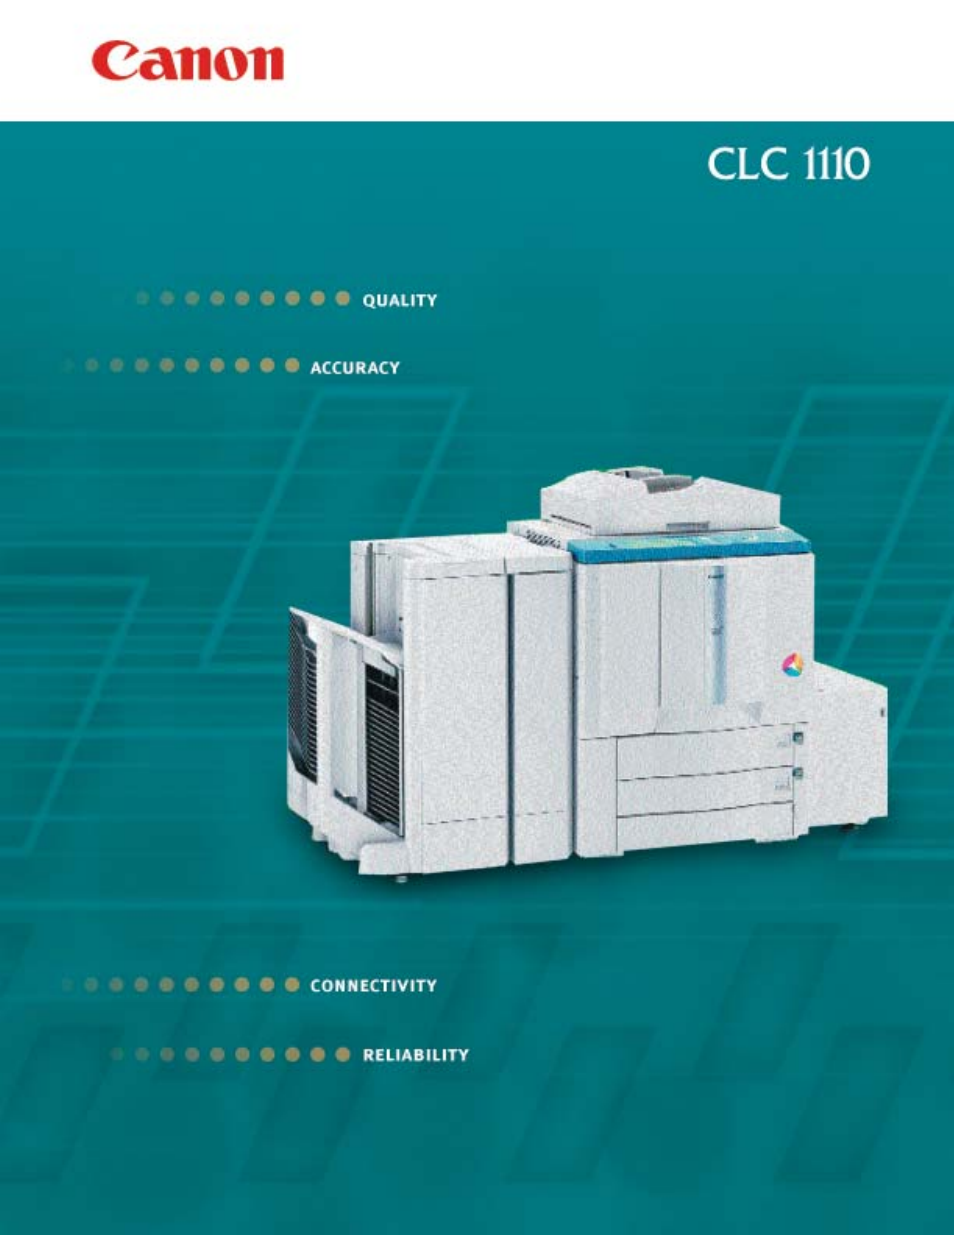 CLC 1110